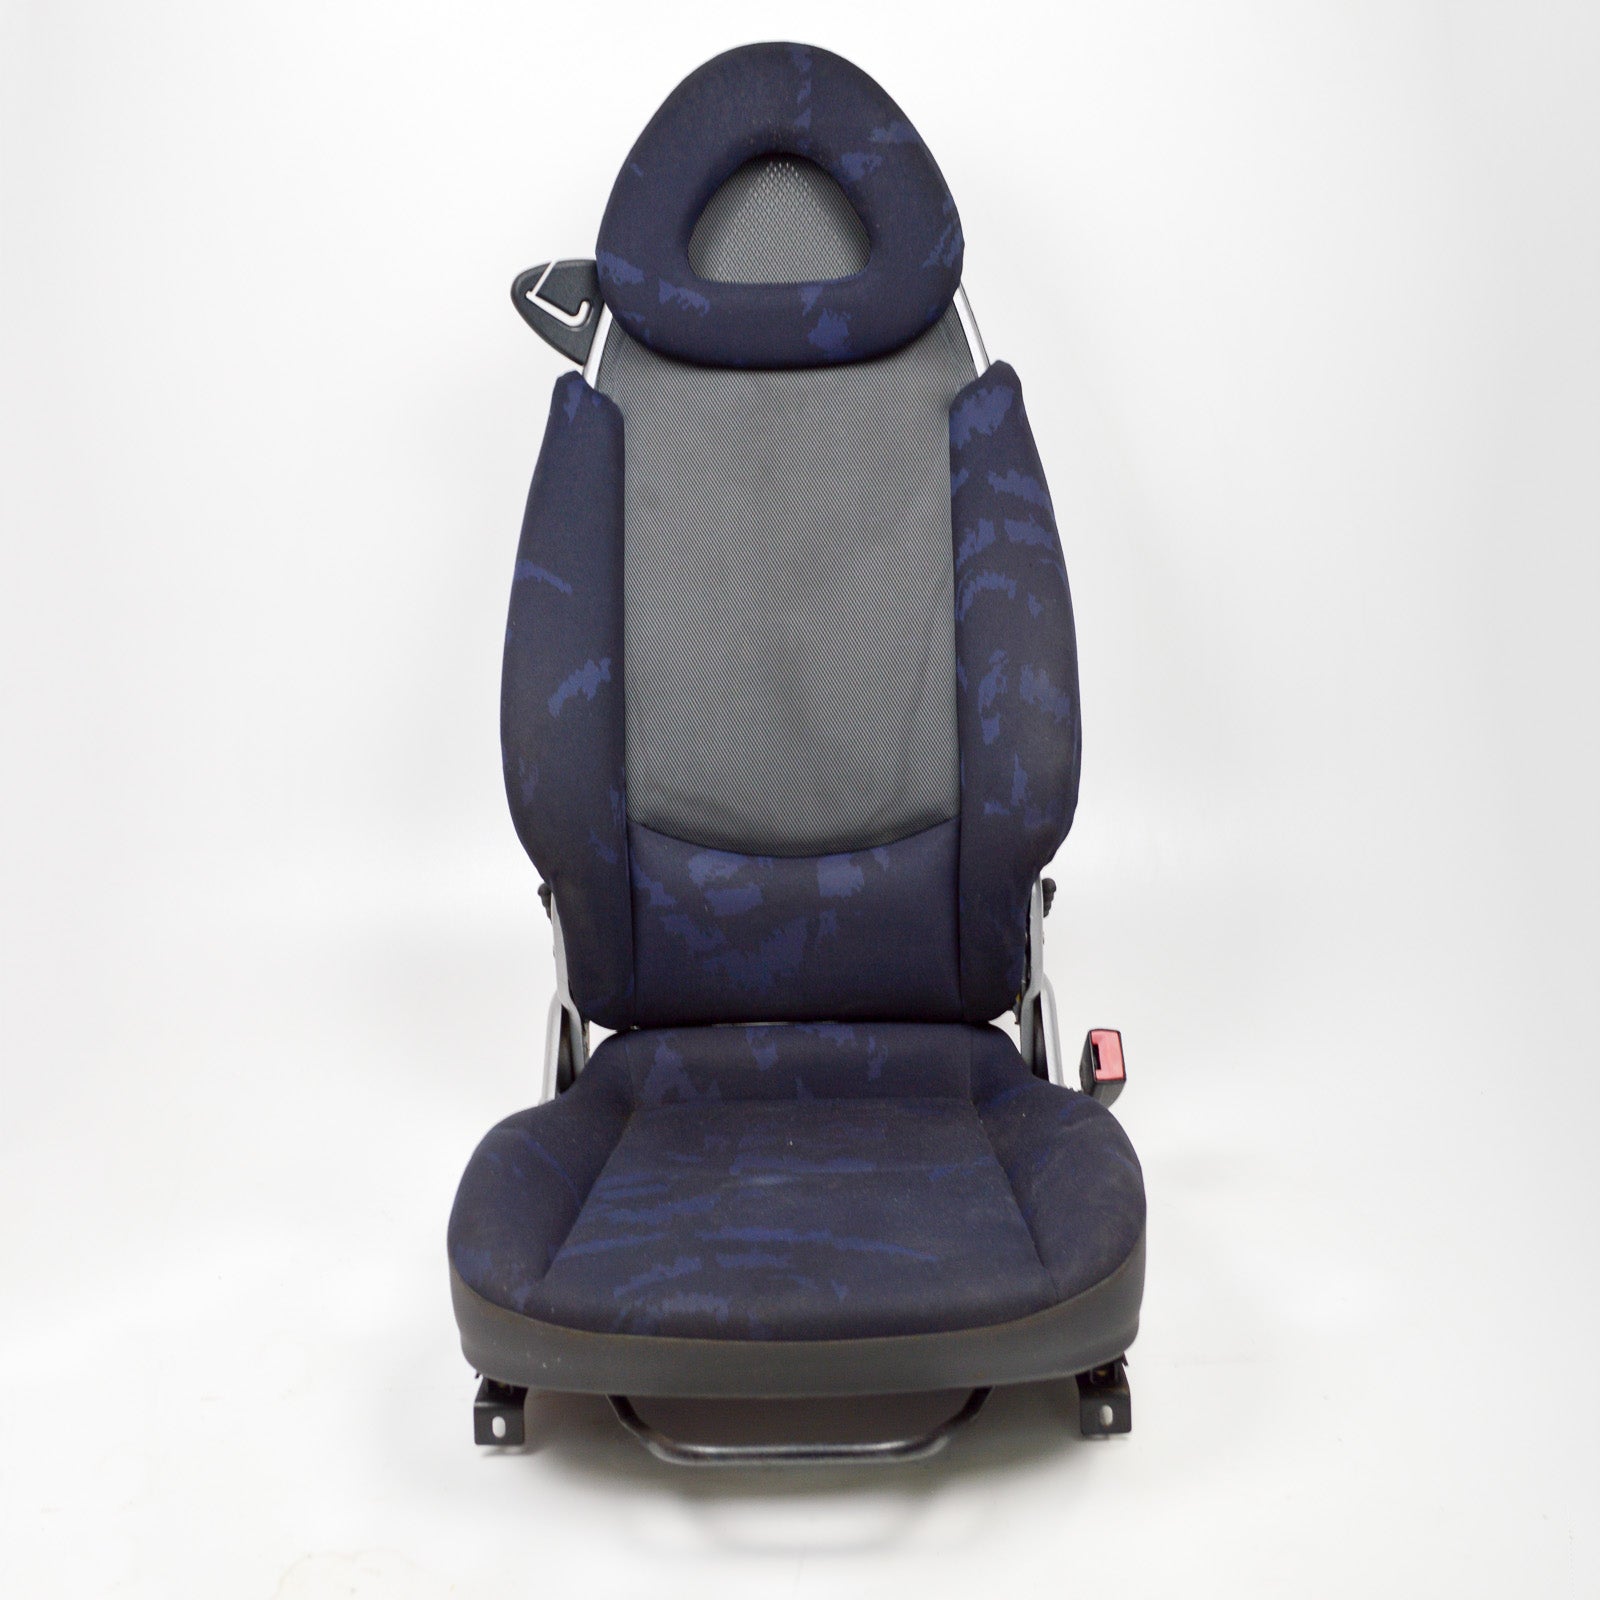 Smart Fortwo 450 sièges siège conducteur siège passager bleu Q0007309V003 Q0007288V003 (utilisé)